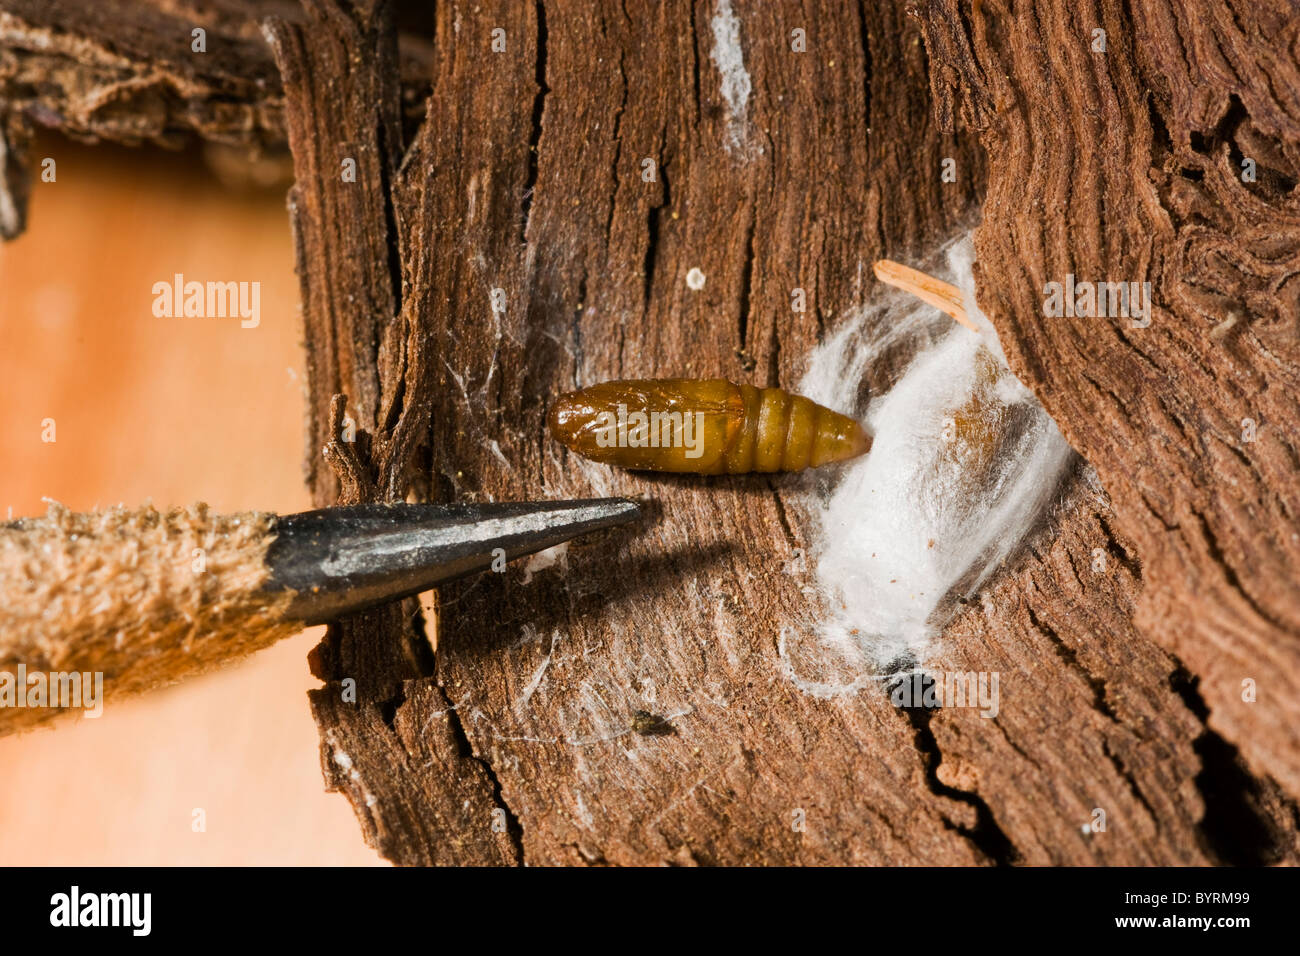 Codling Moth Killer - Naturally Kill Codling Moth & Protect Apple Trees -  Dragonfli